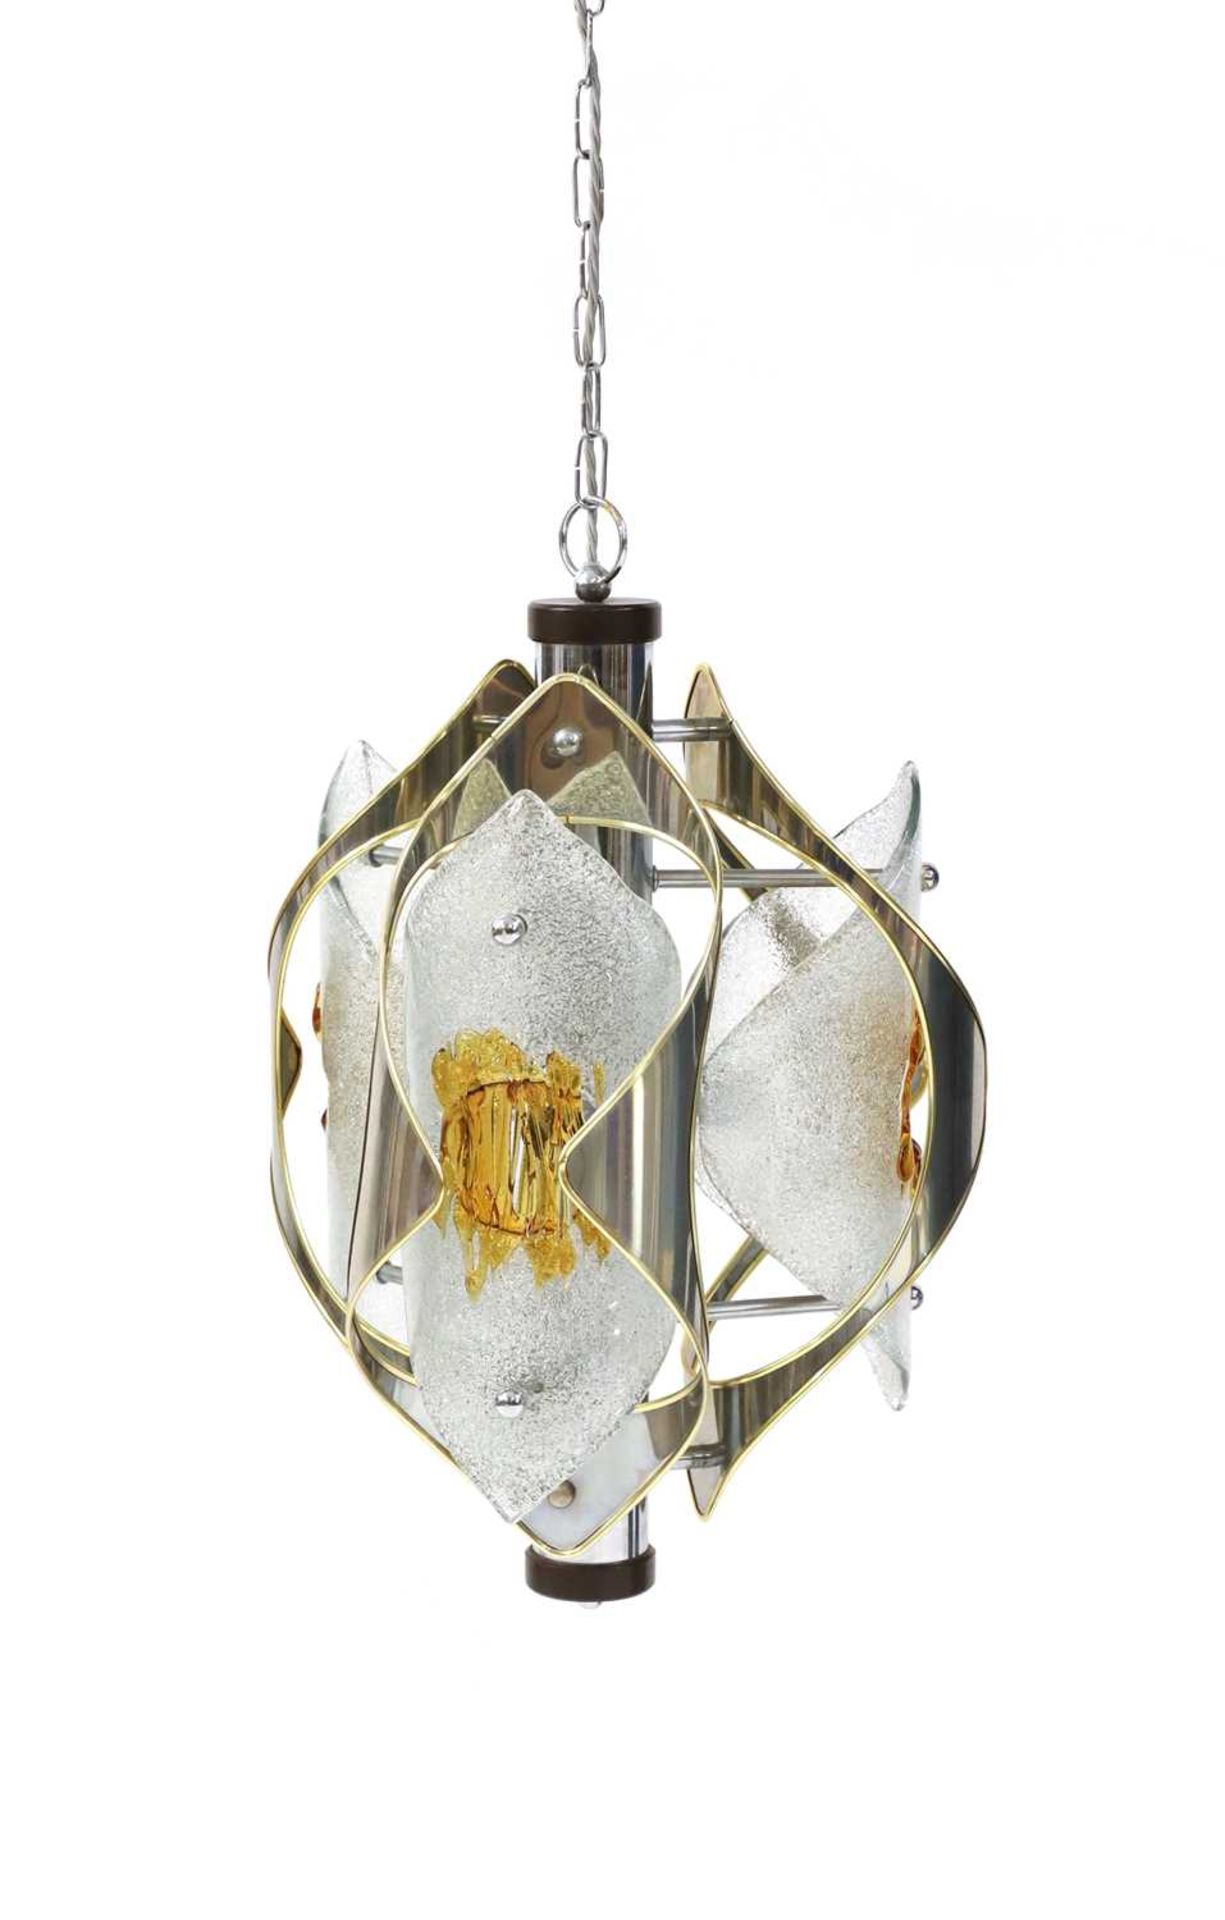 An Italian pendant light,